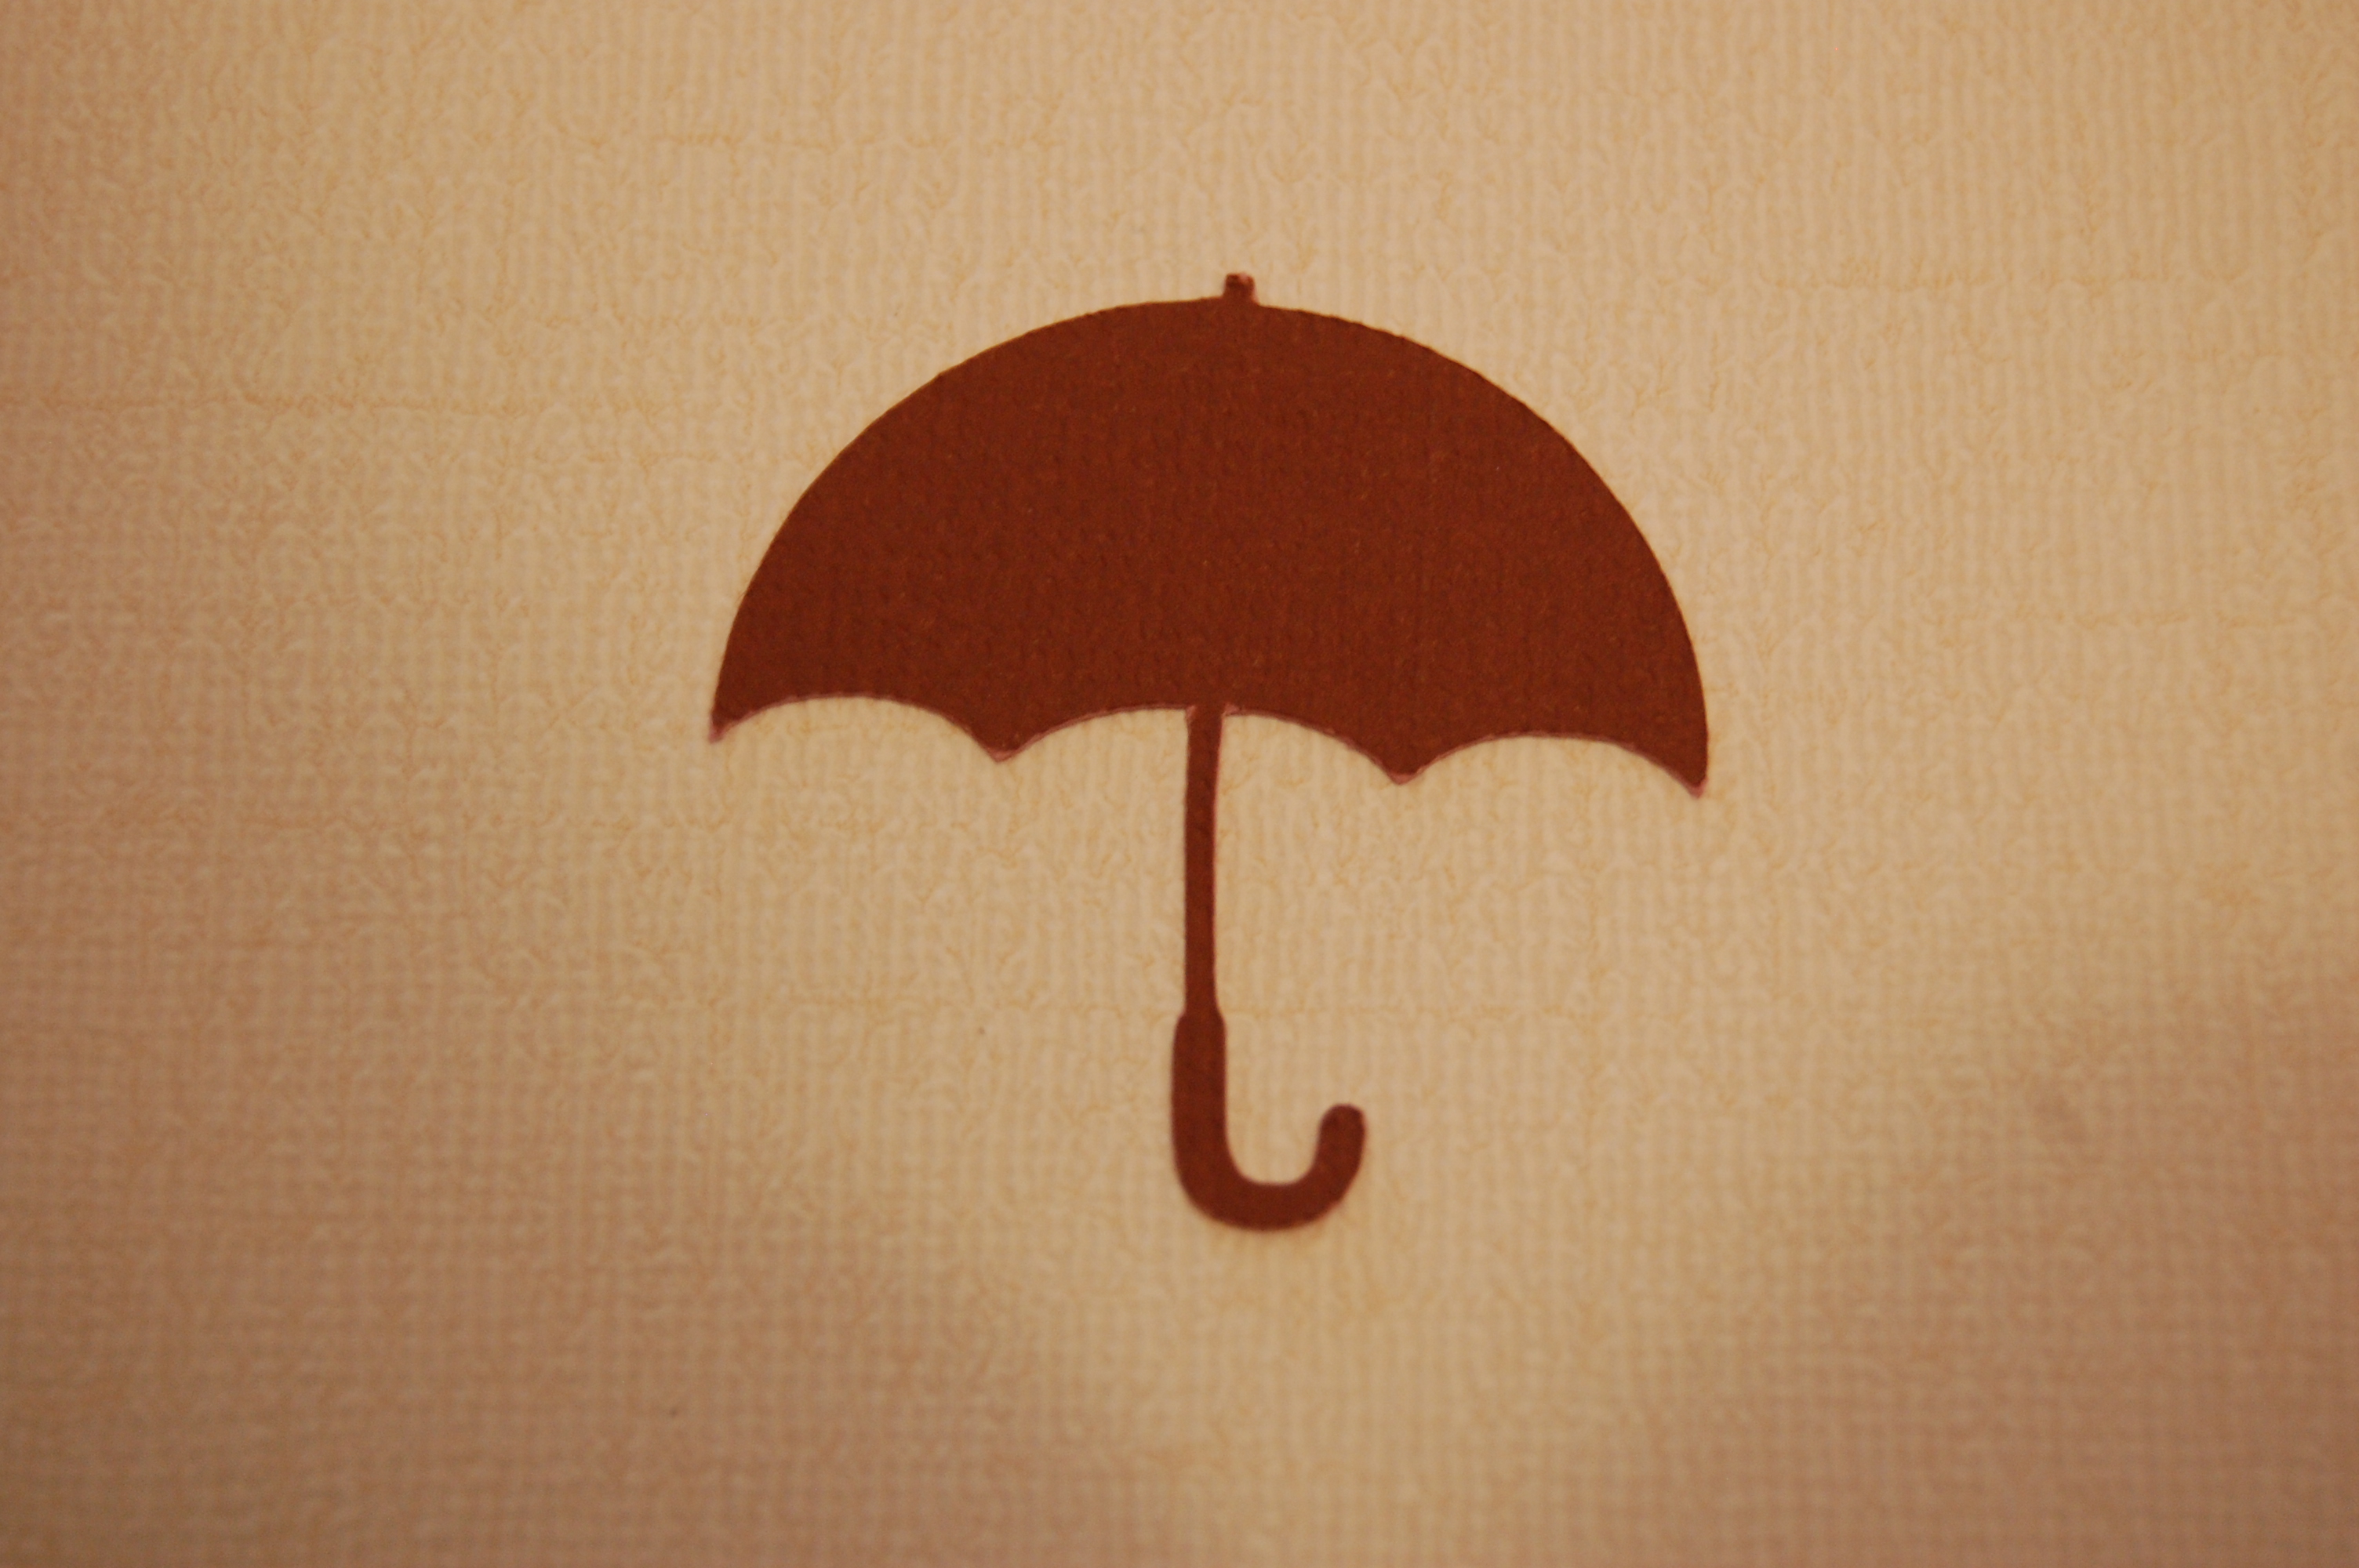 Diemond Dies Mini Umbrella Die